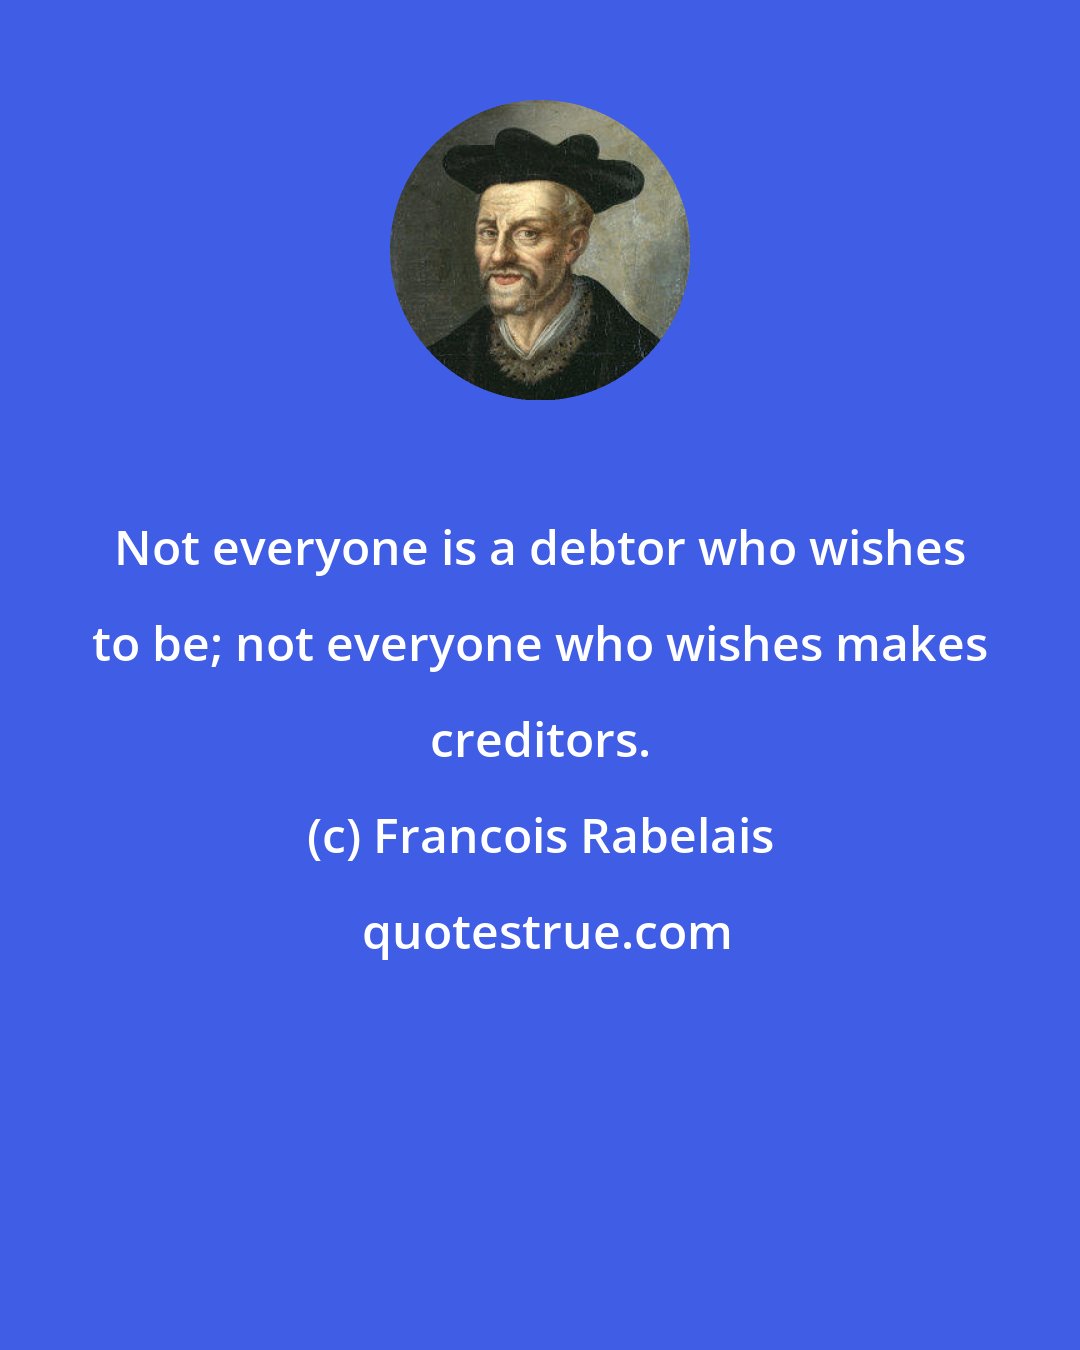 Francois Rabelais: Not everyone is a debtor who wishes to be; not everyone who wishes makes creditors.